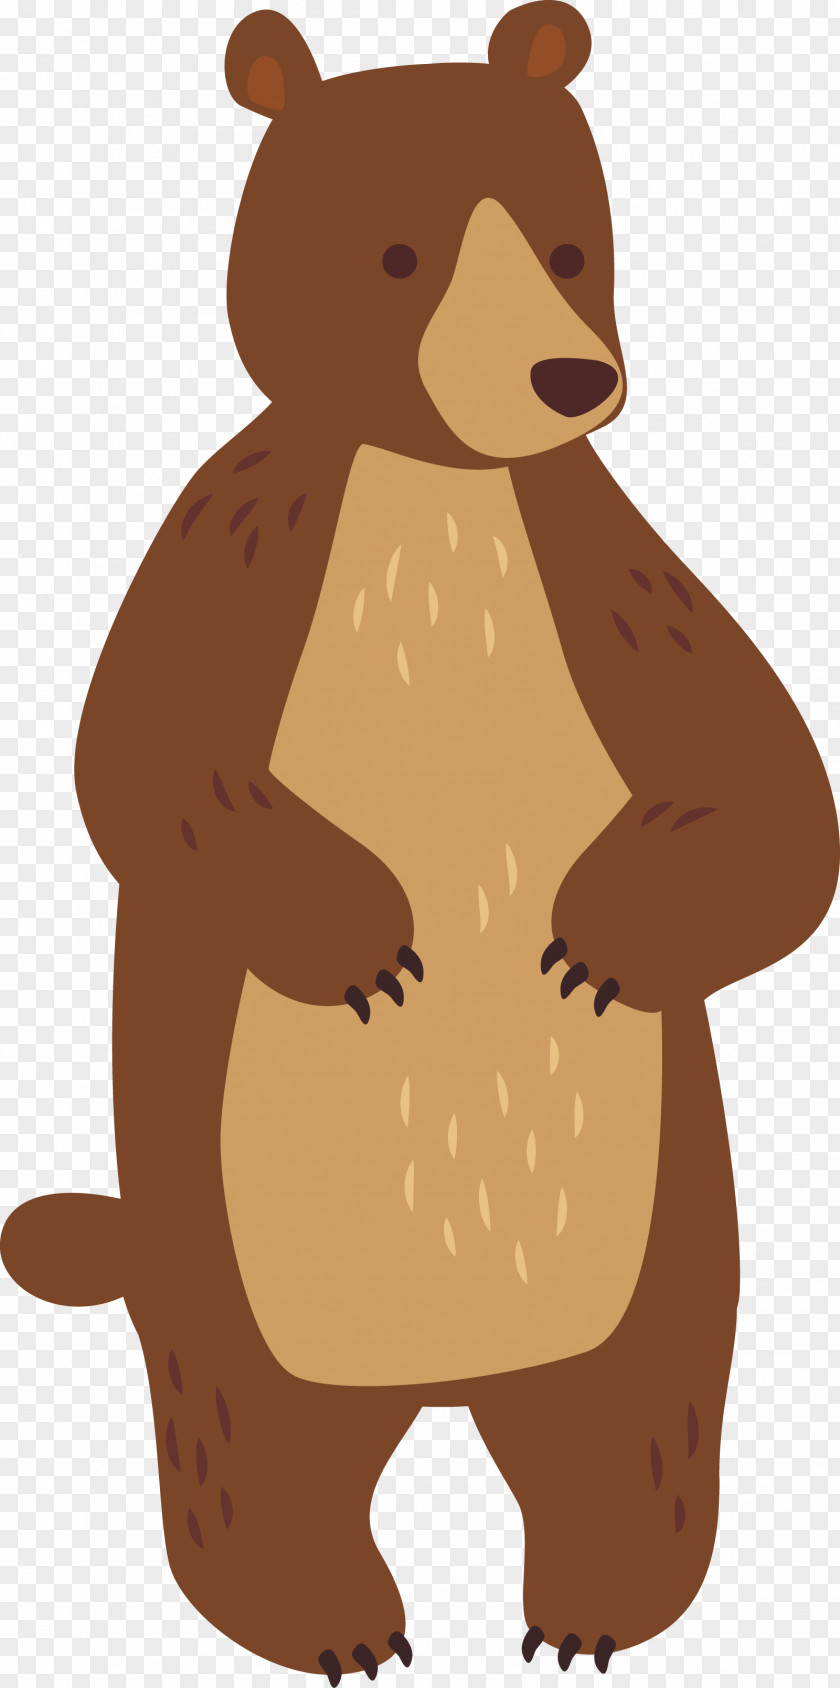 Bear Cartoon Design Adobe Illustrator PNG